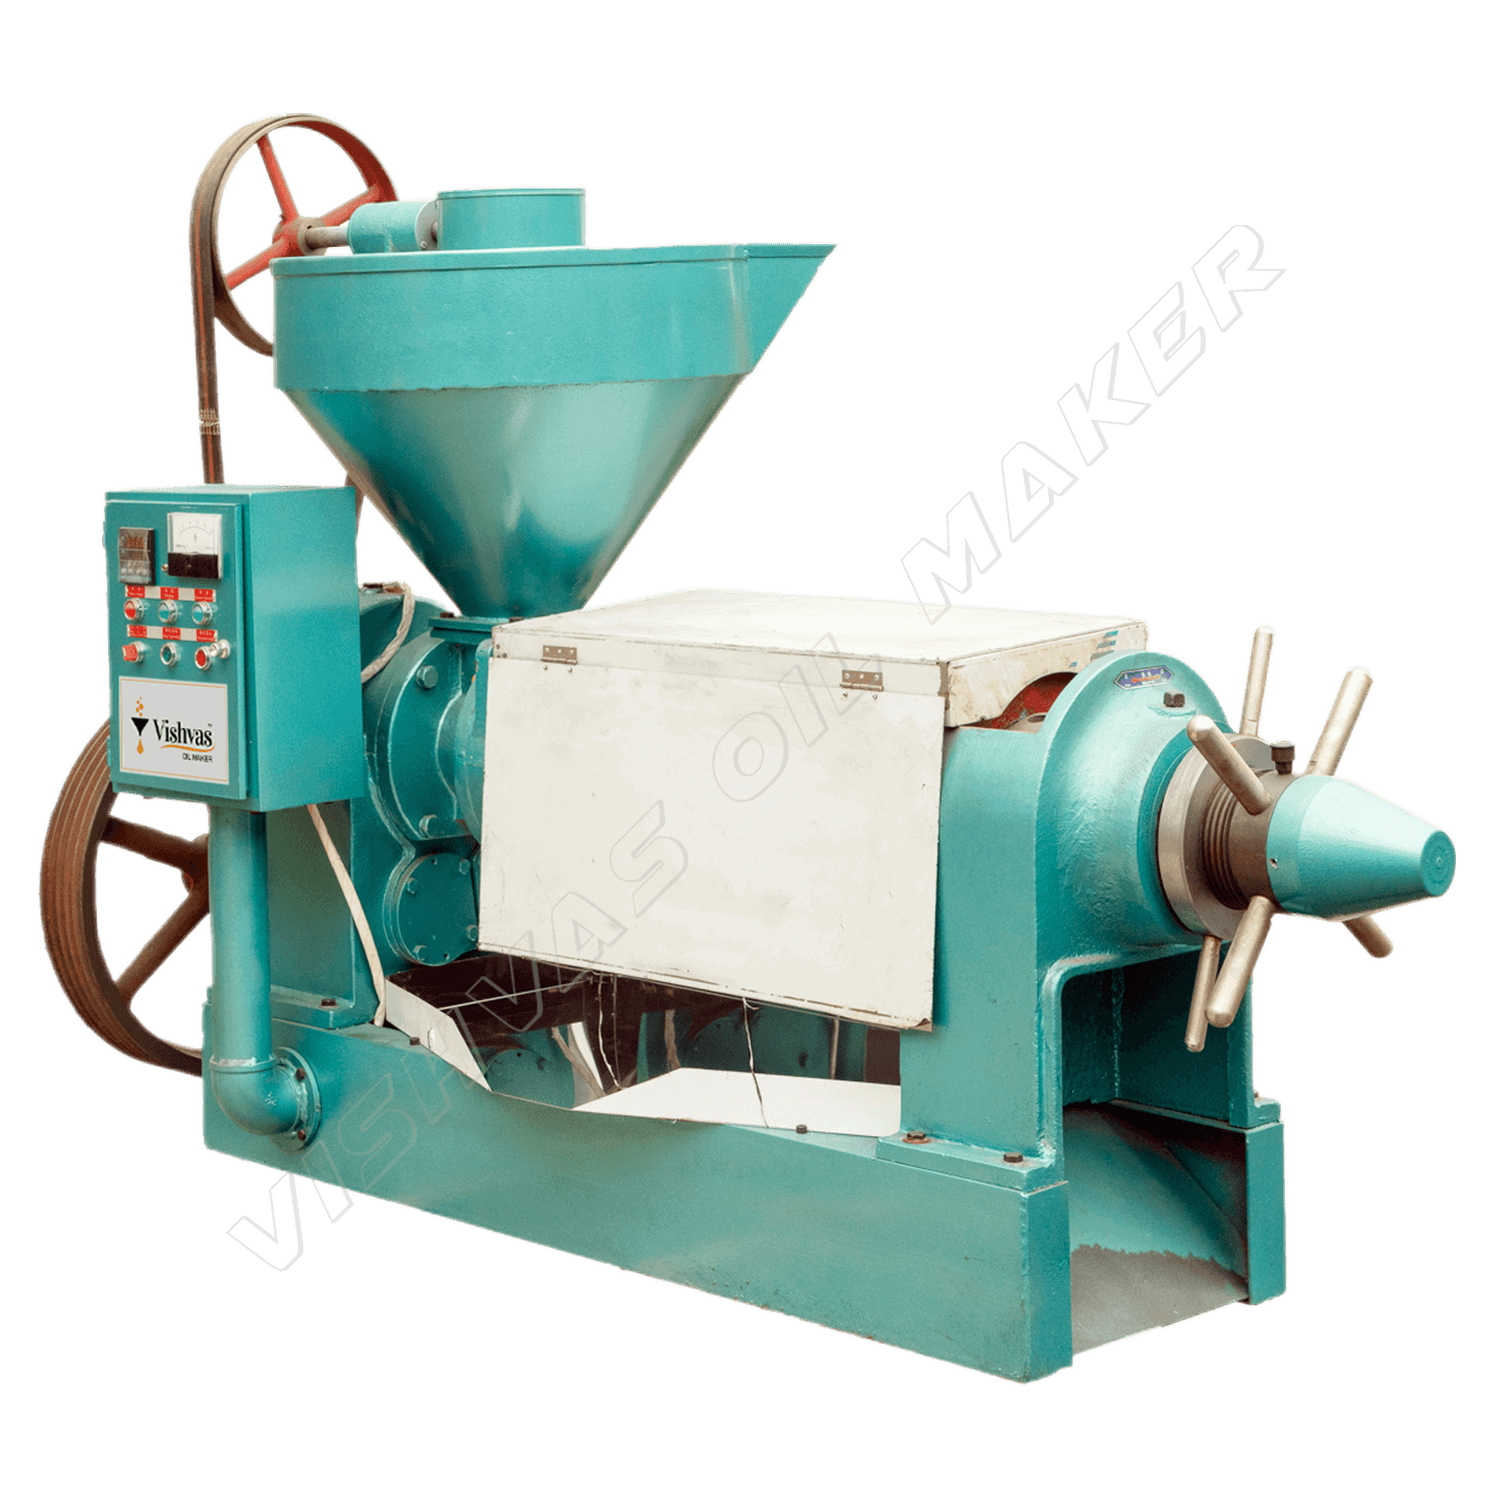 Oil Press Machine for Commercial Use VI-6500(A)